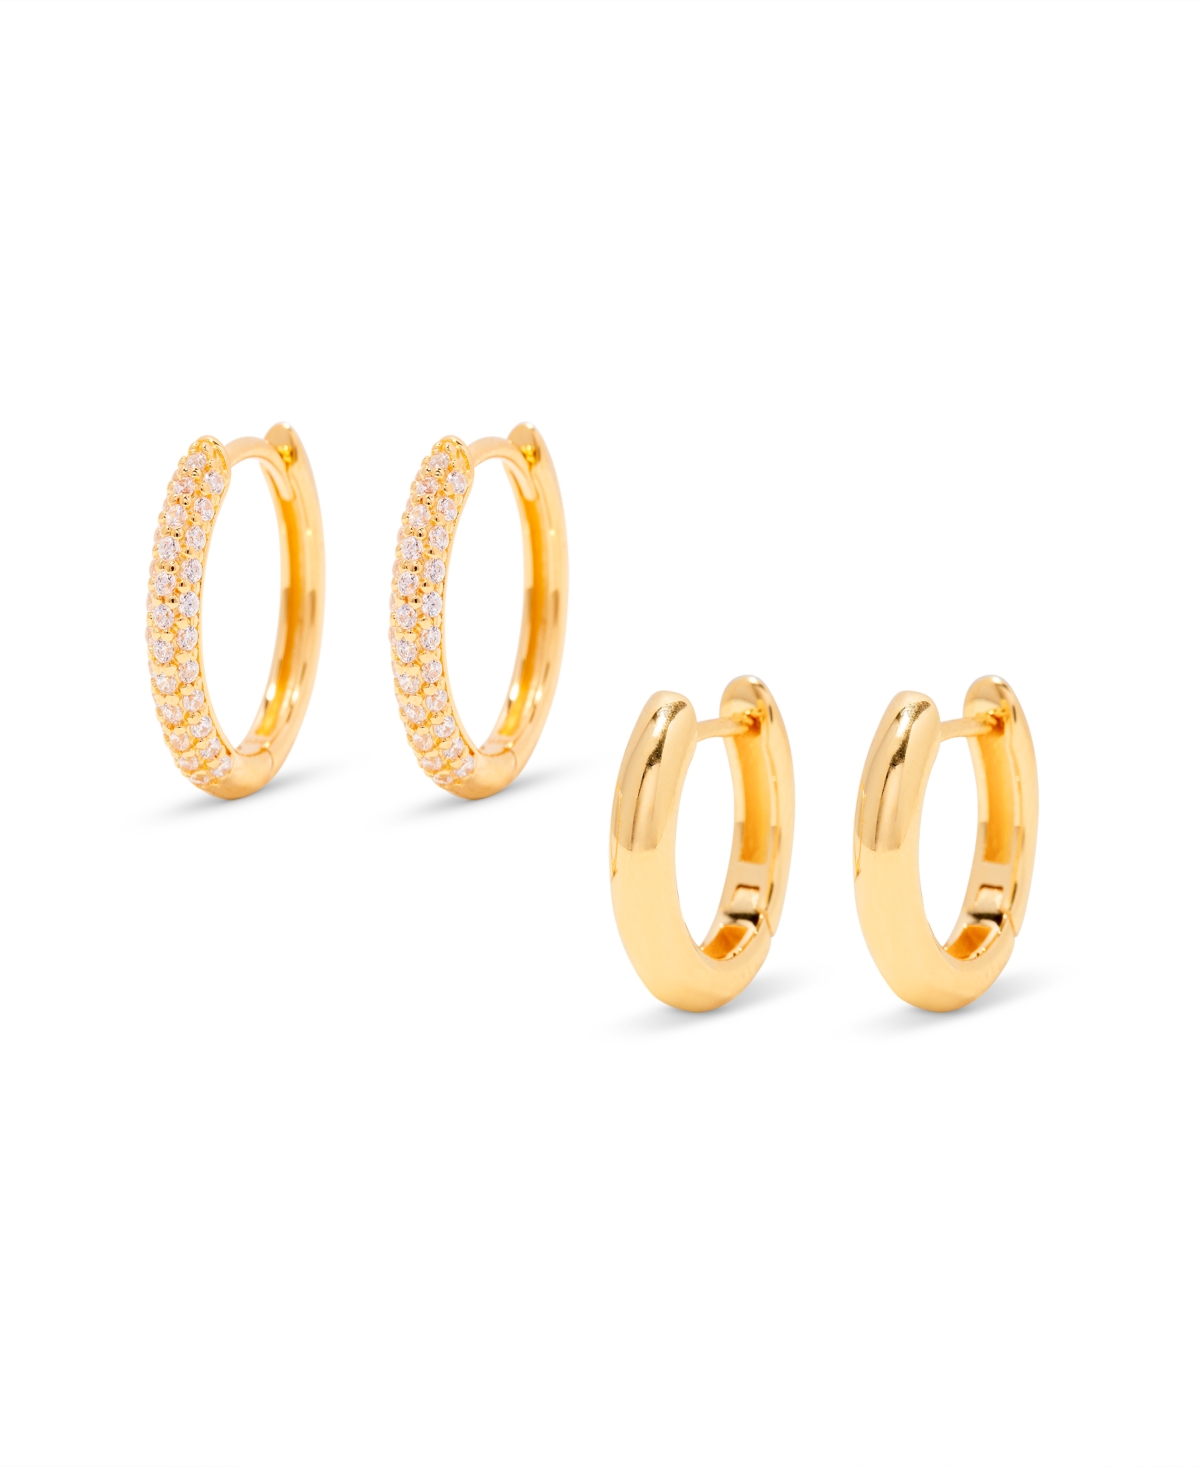 Shop Brook & York "14k Gold" Cecile Cubic Zirconia Earring Set, 4 Piece In Gold Vermeil